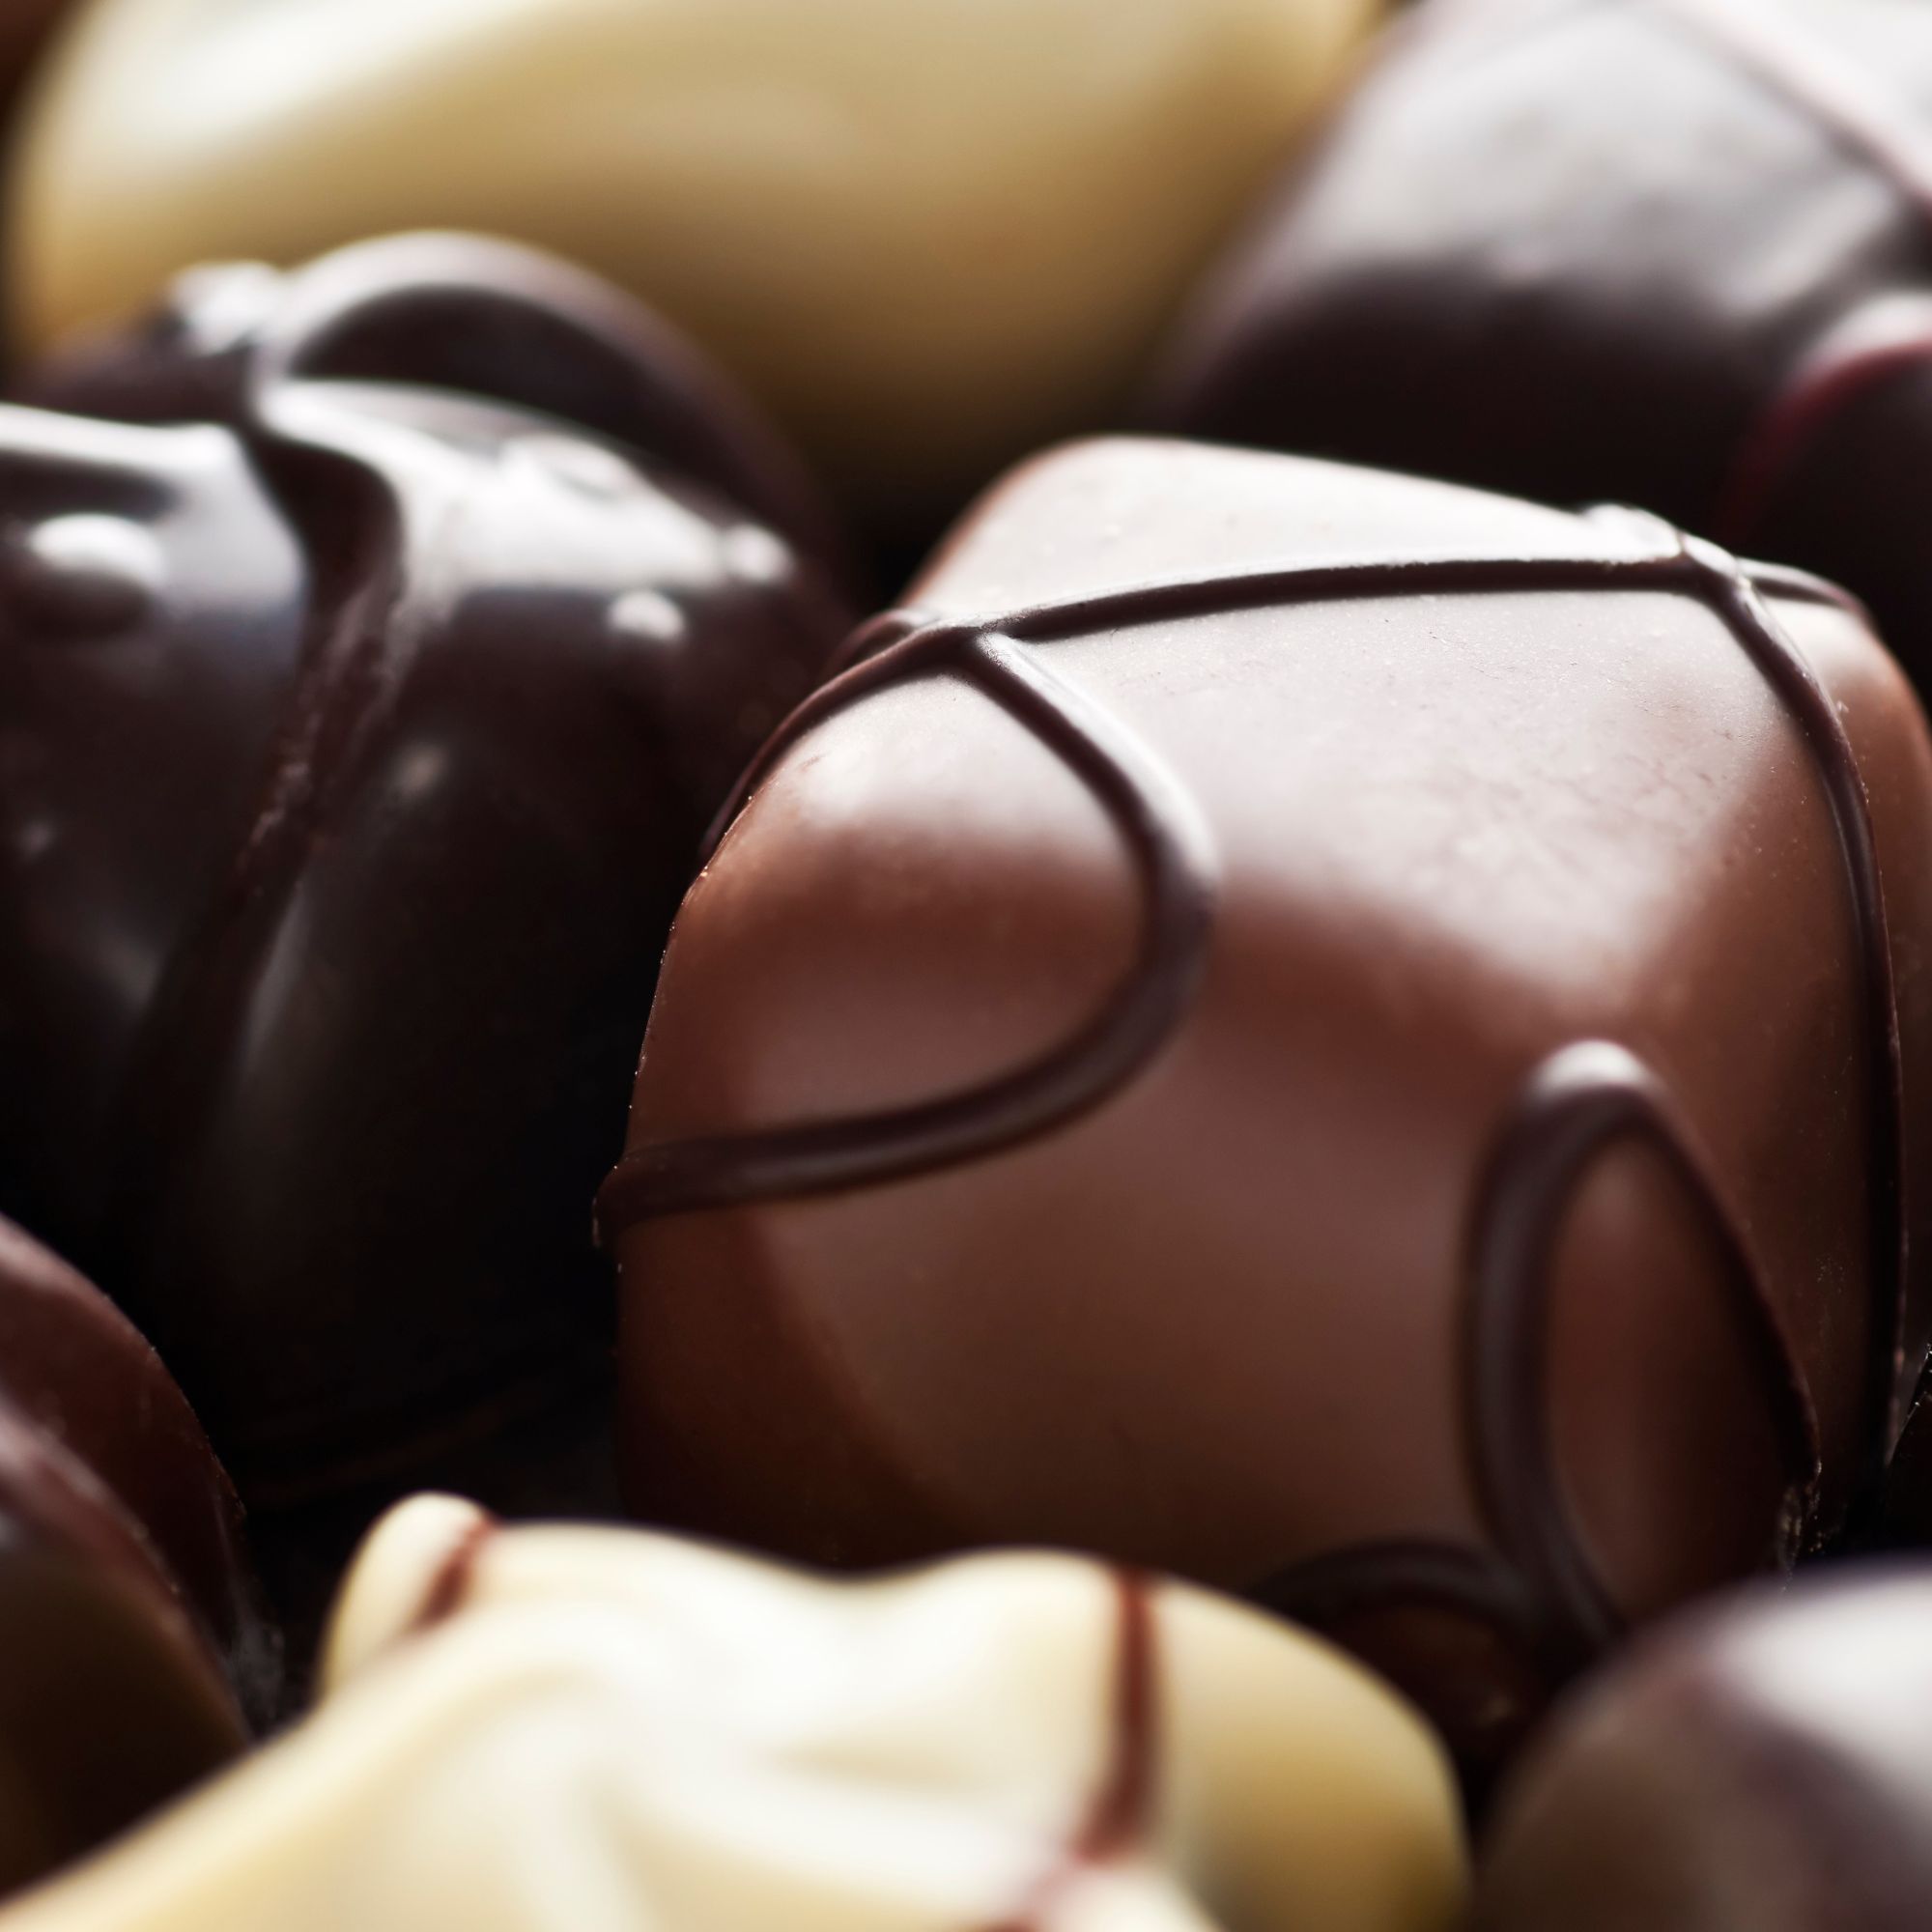 Chocolate candy